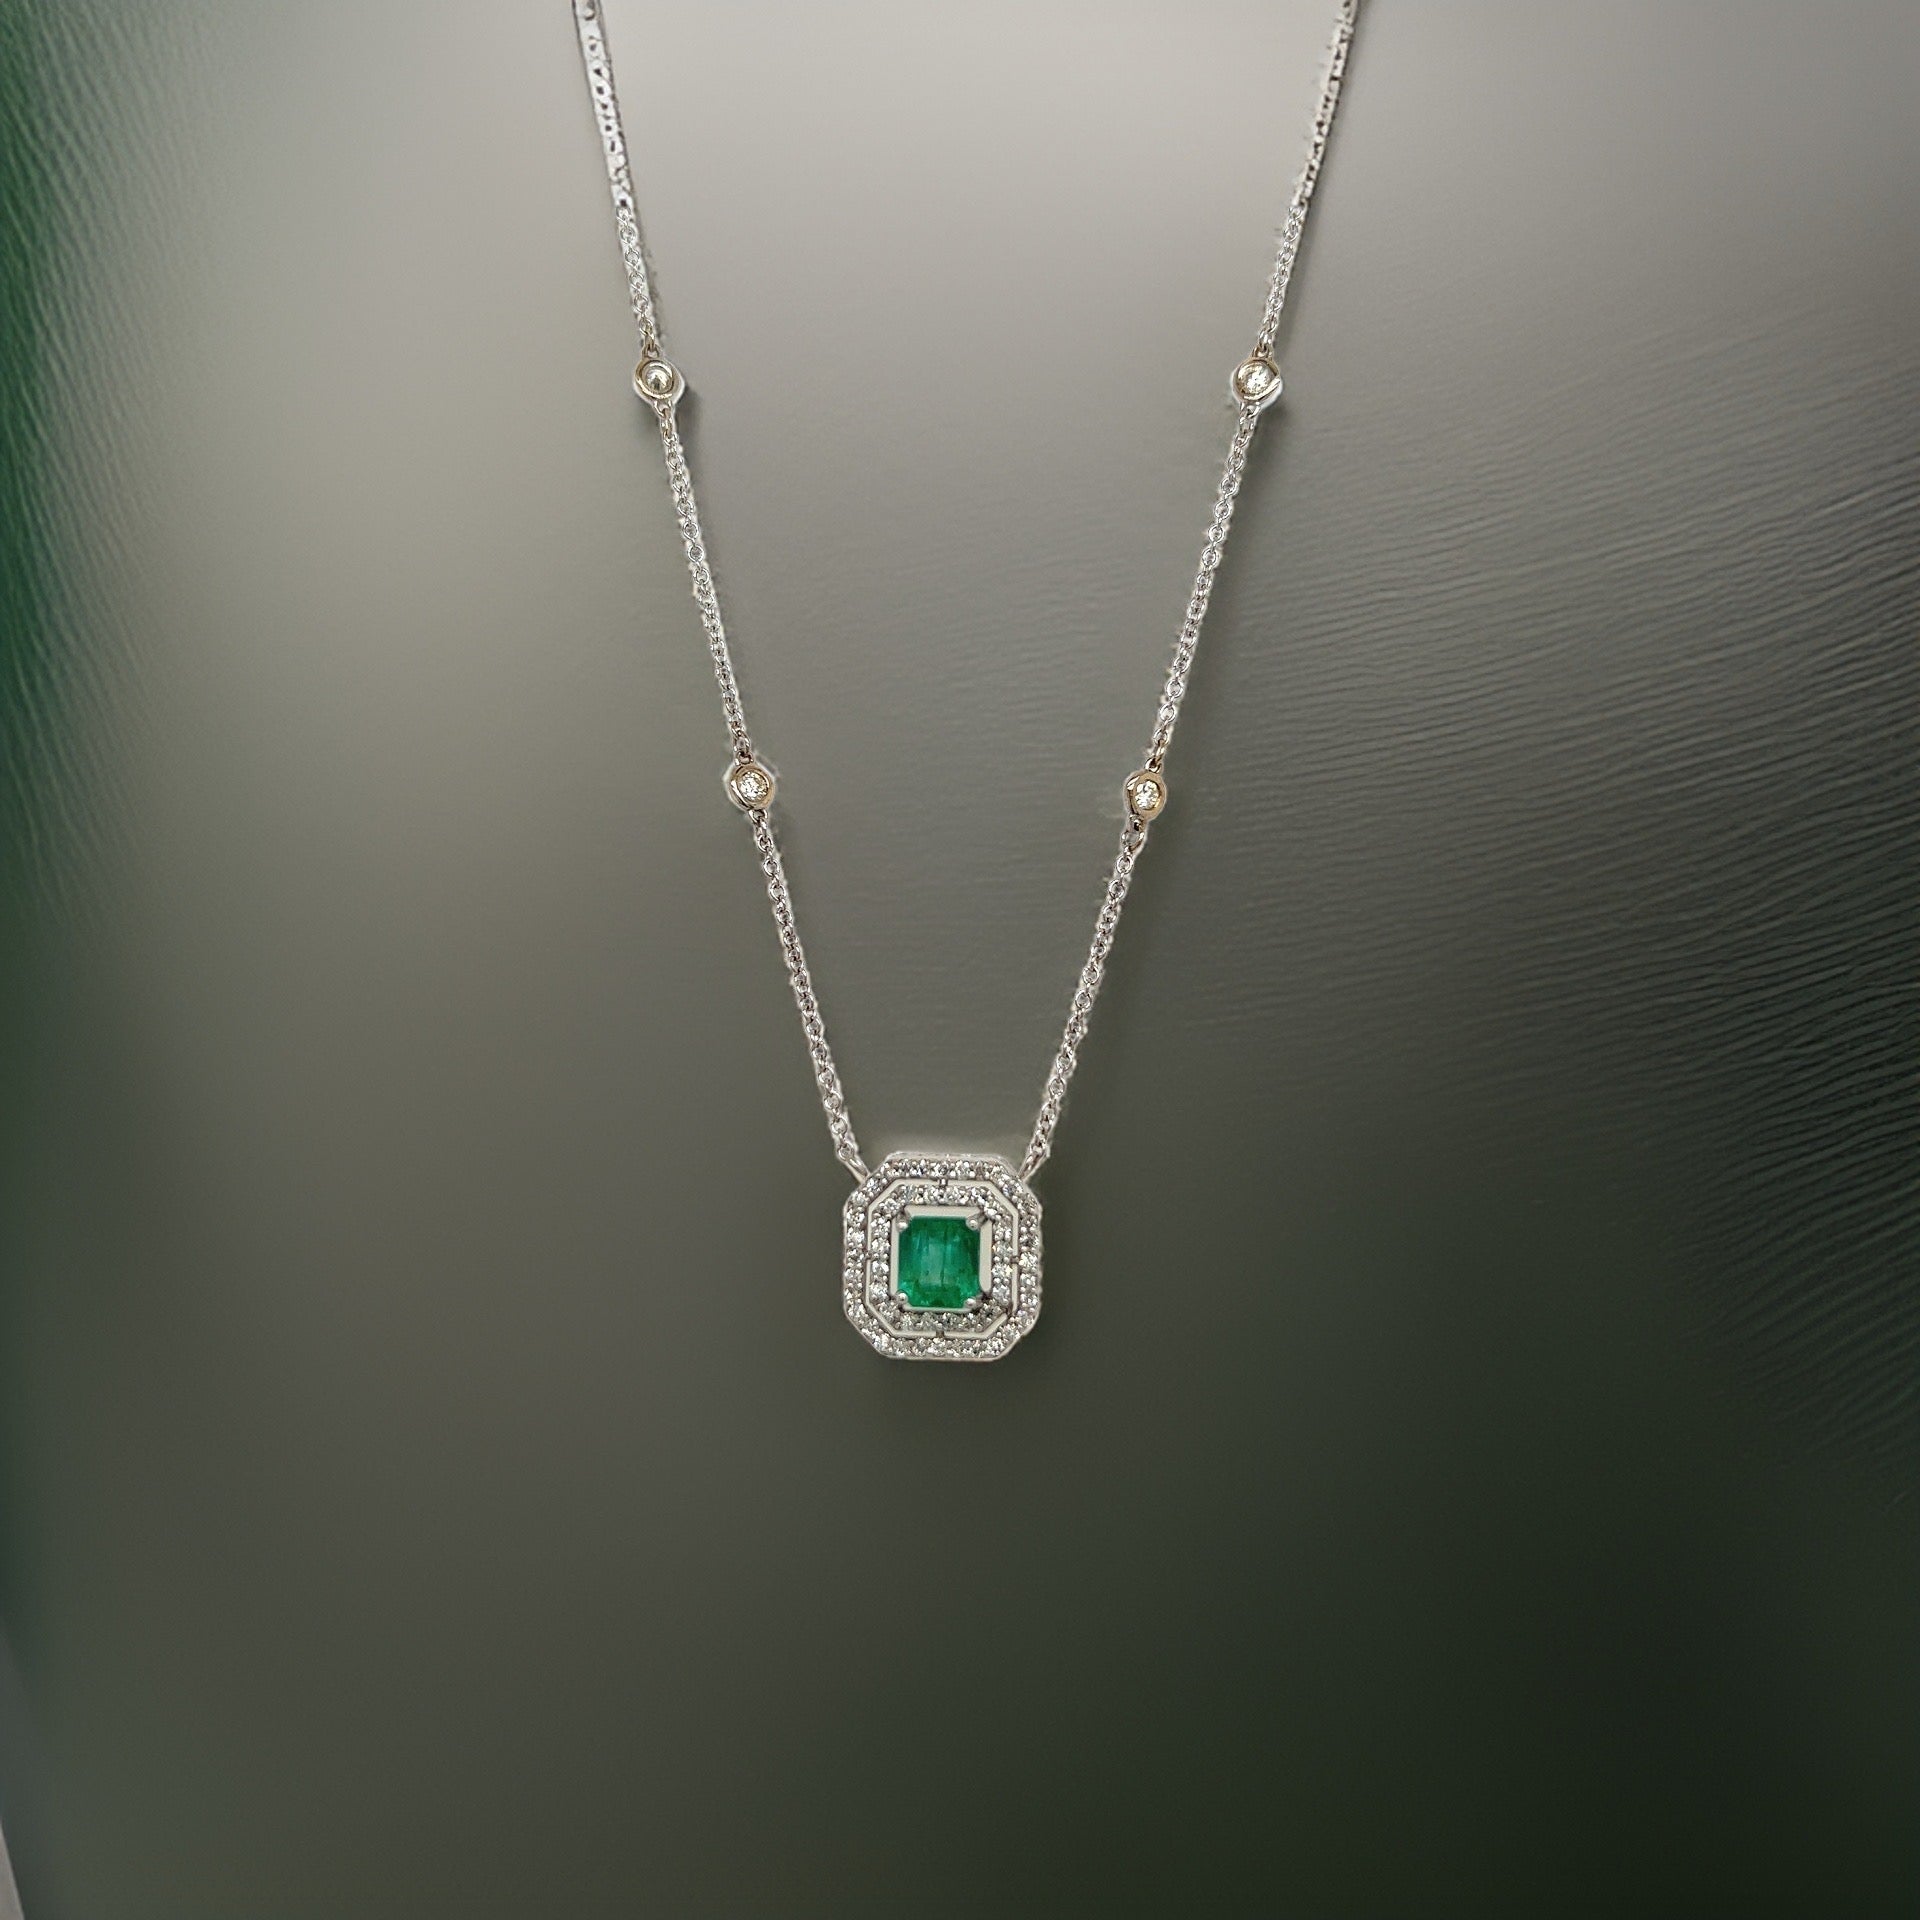 Natural Emerald Diamond Halo Pendant With Chain 18" 14k WG 1.26 TCW Certified $4,950 300677 - Certified Fine Jewelry